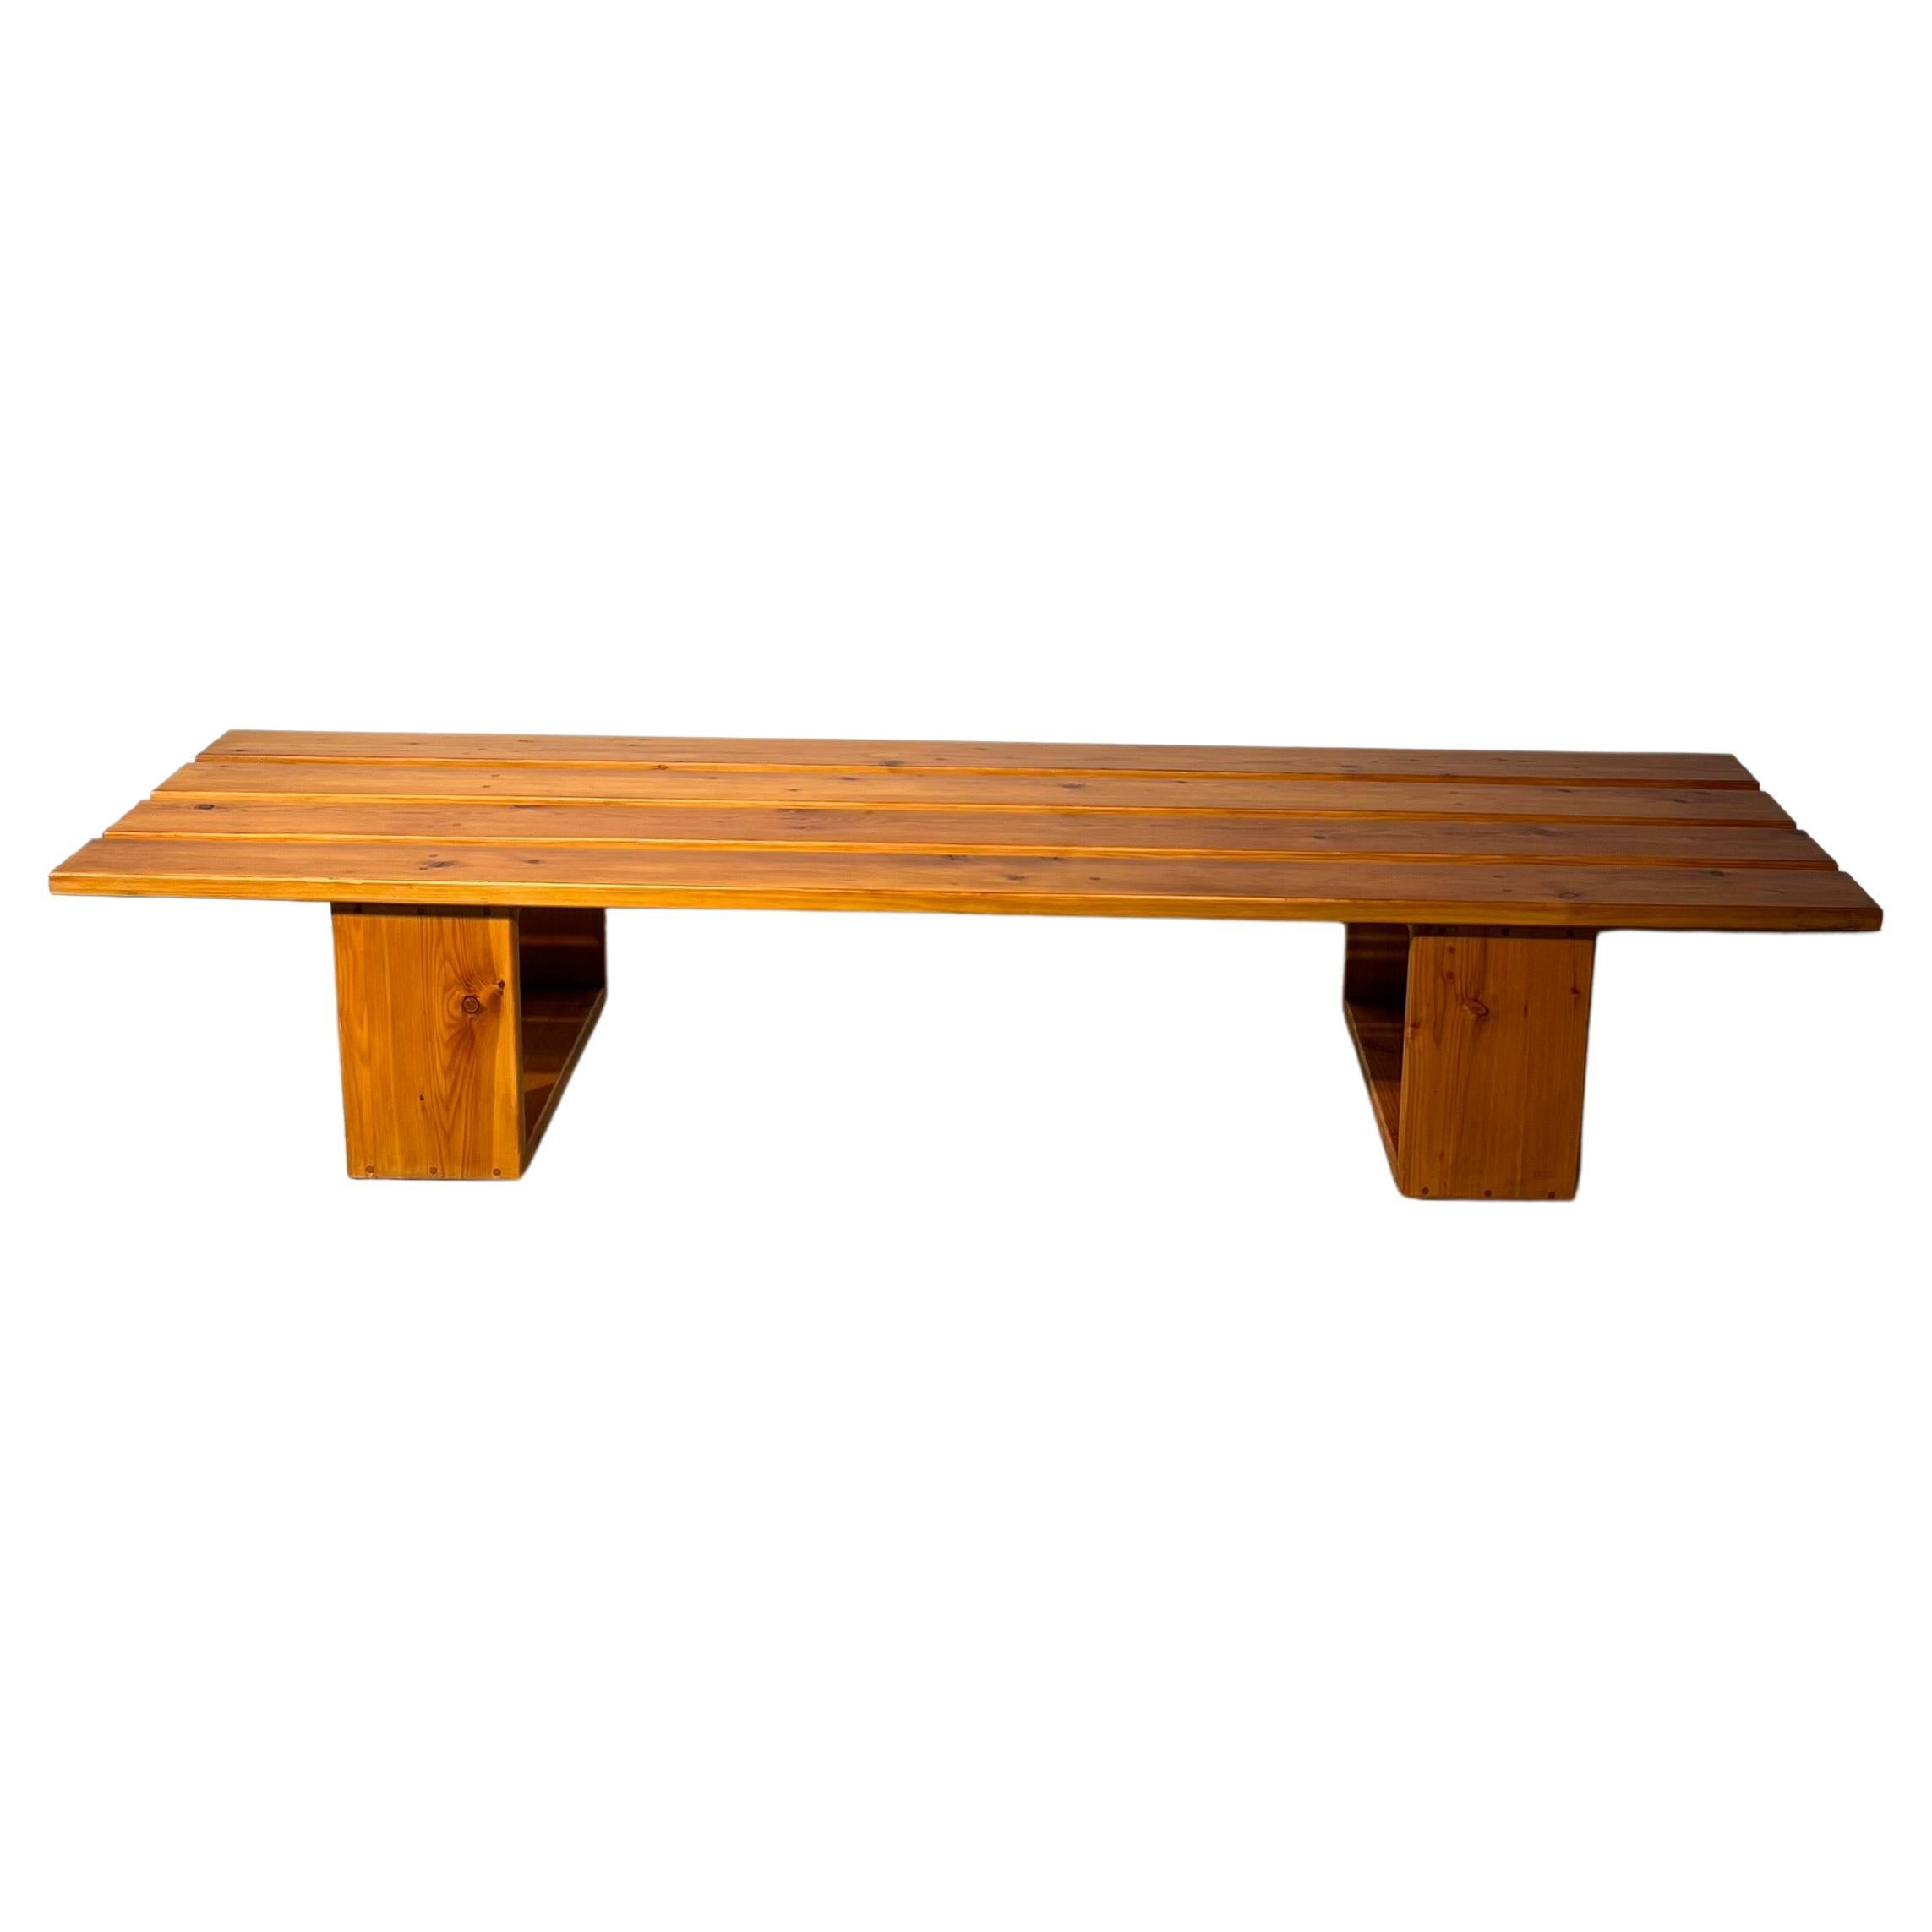 Large coffee table / bench by Ate Van Apeldoorn For Sale